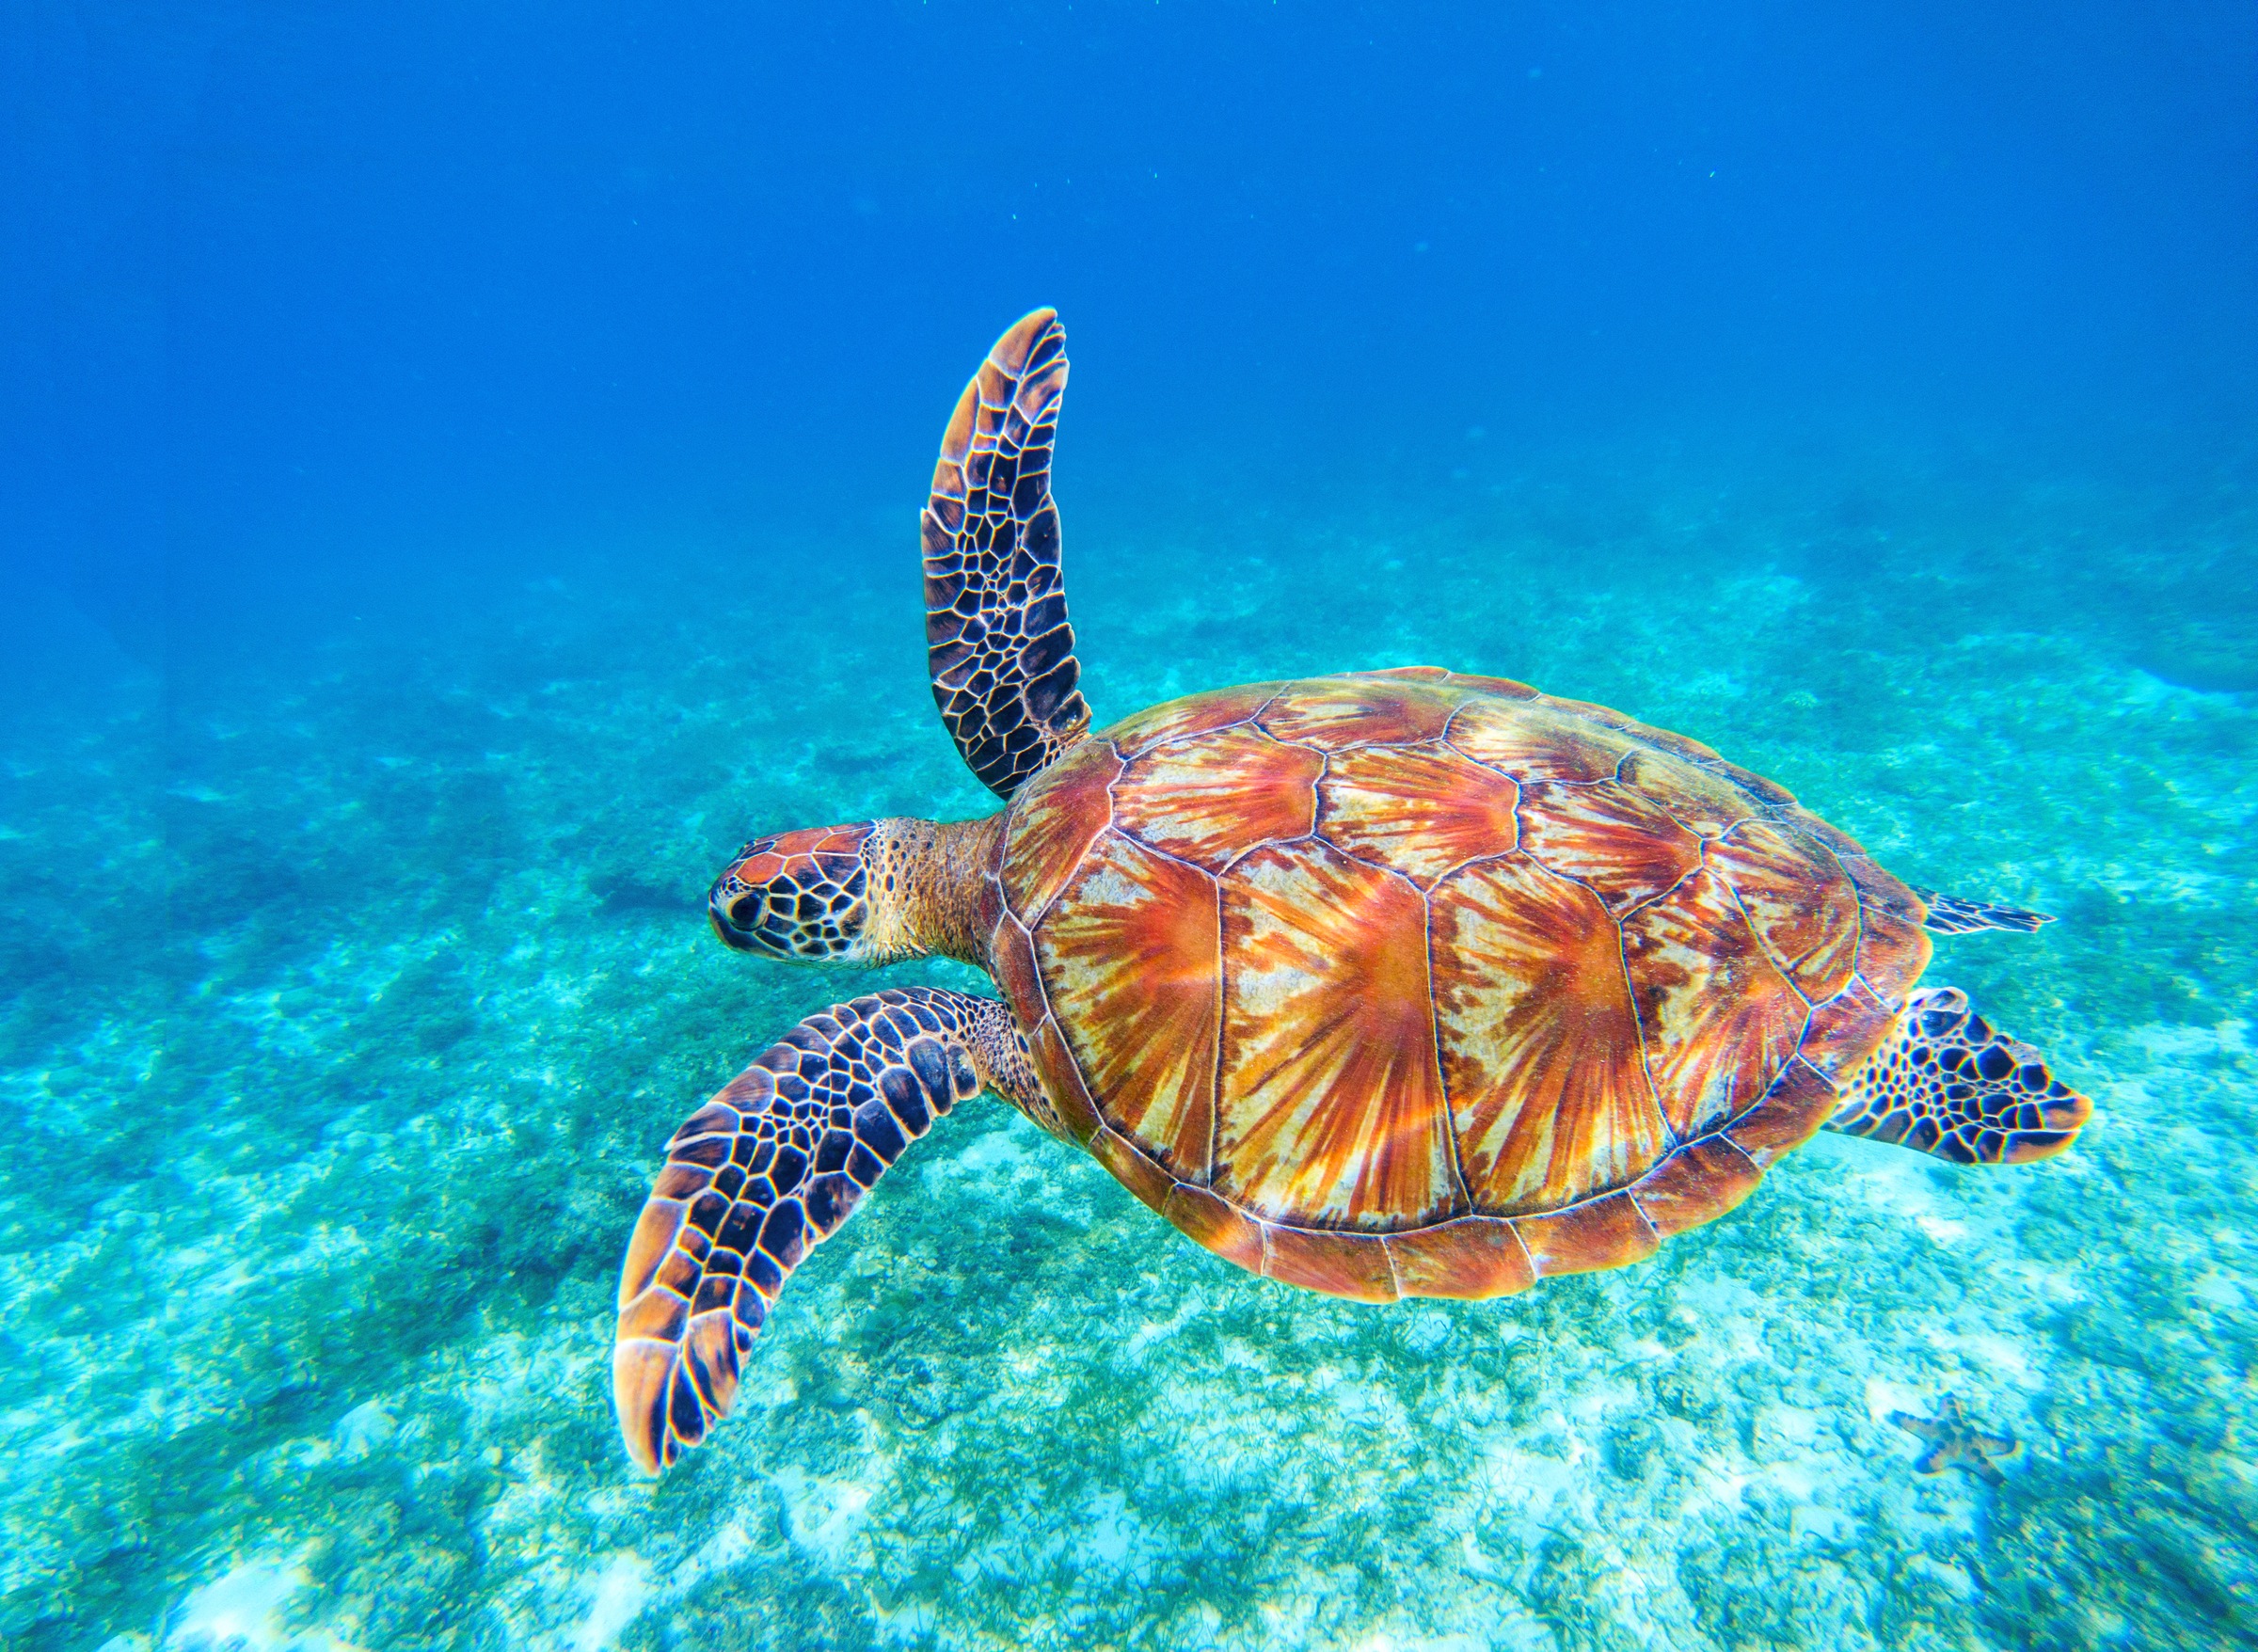 Fototapete »Big Green Sea Turtle«